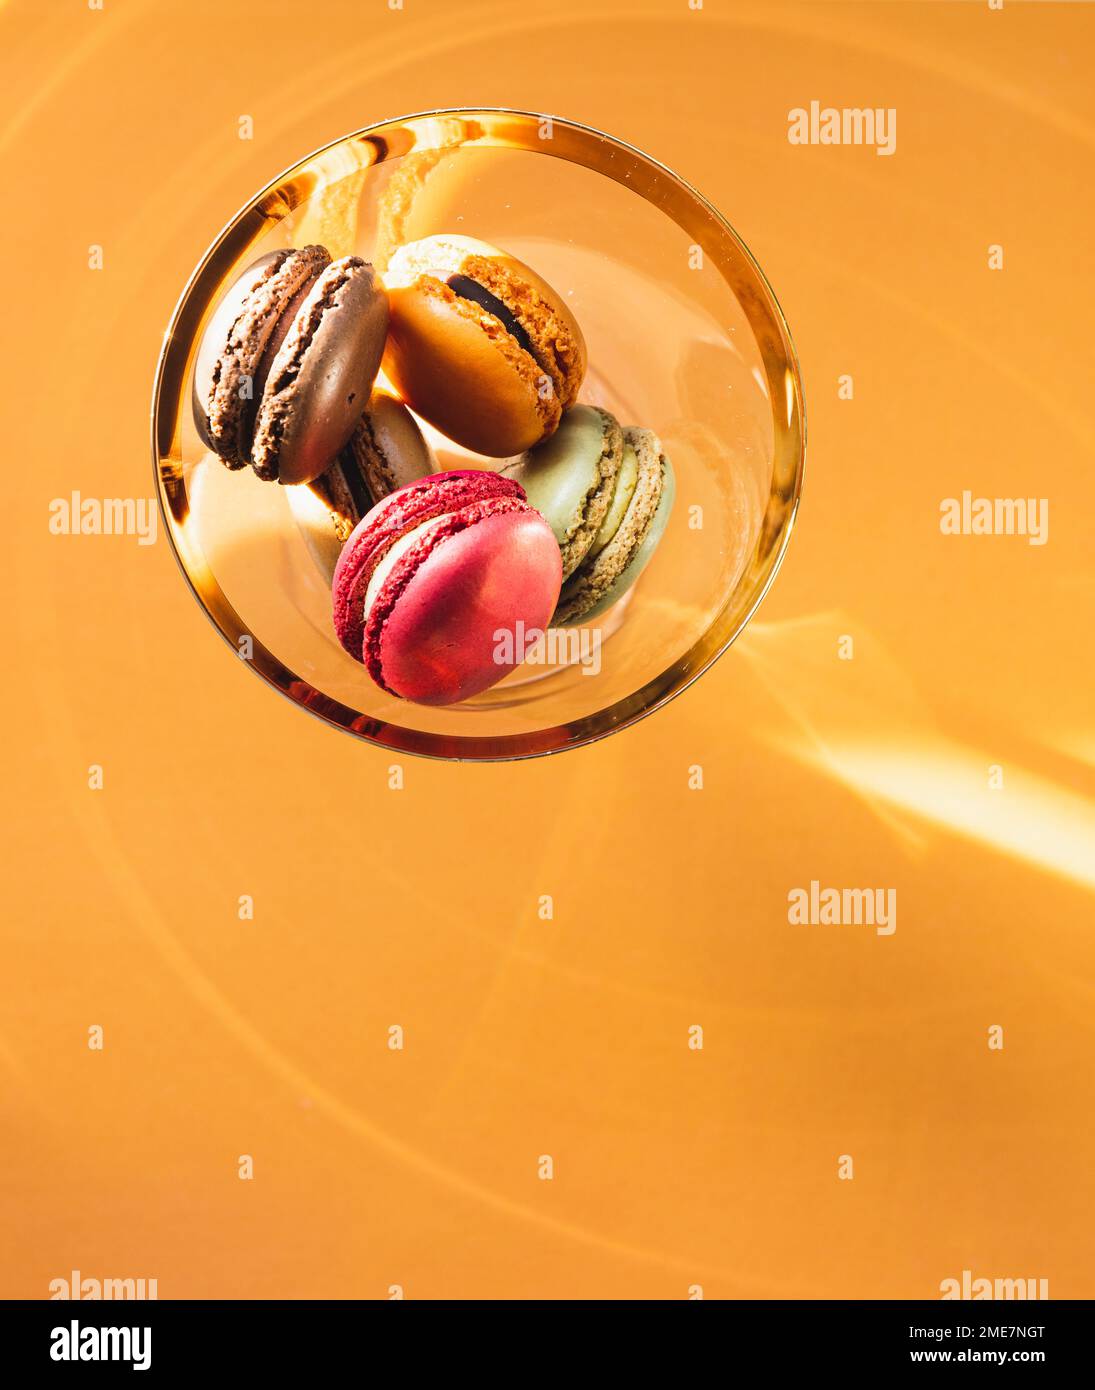 Farbenfrohe Macaron-Kekse in goldenem Glas auf goldenem Hintergrund Stockfoto